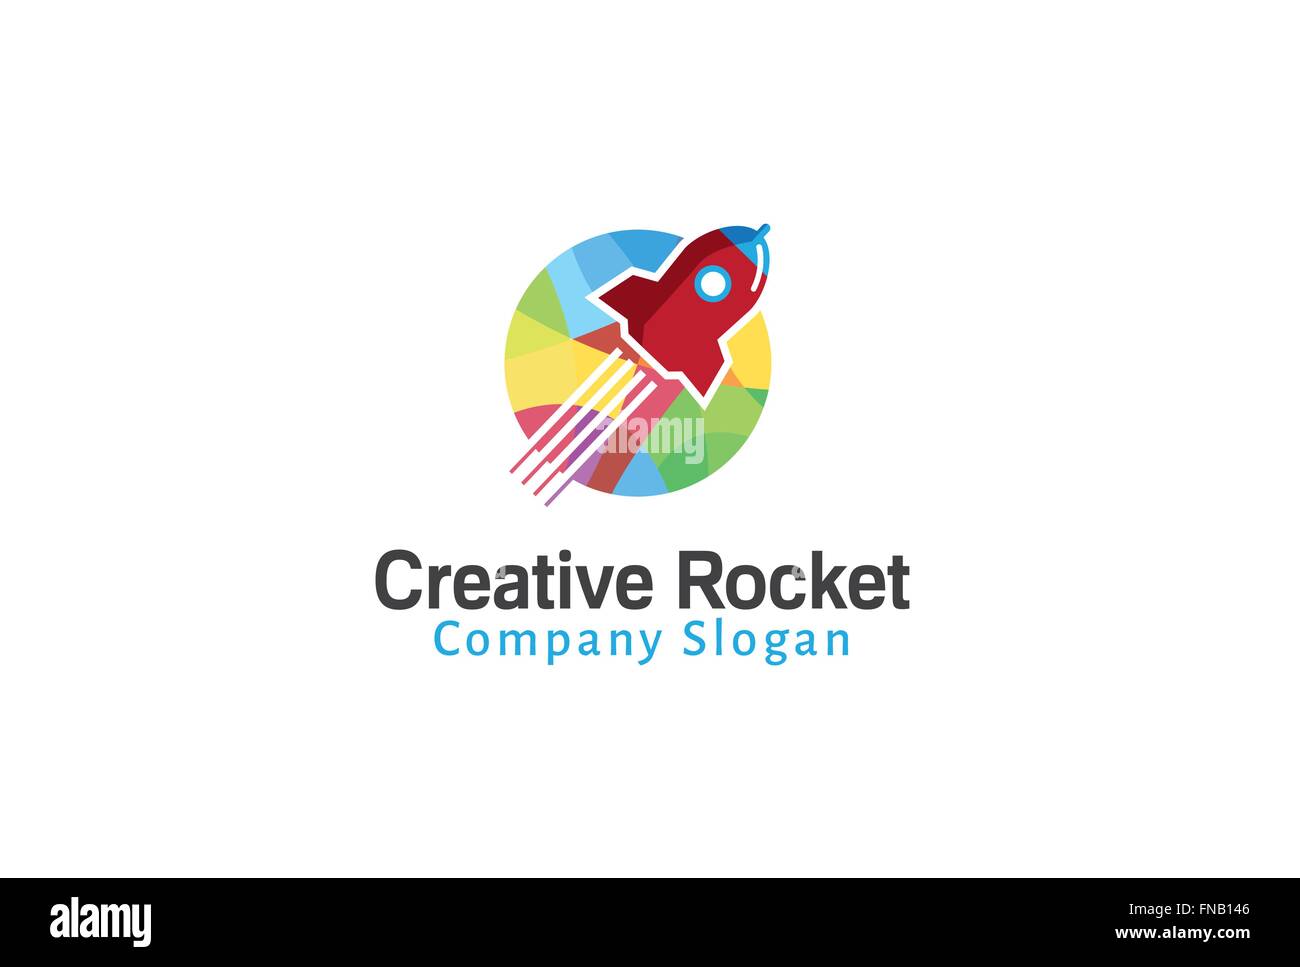 Creative Rocket Design Illustration Stock Vector